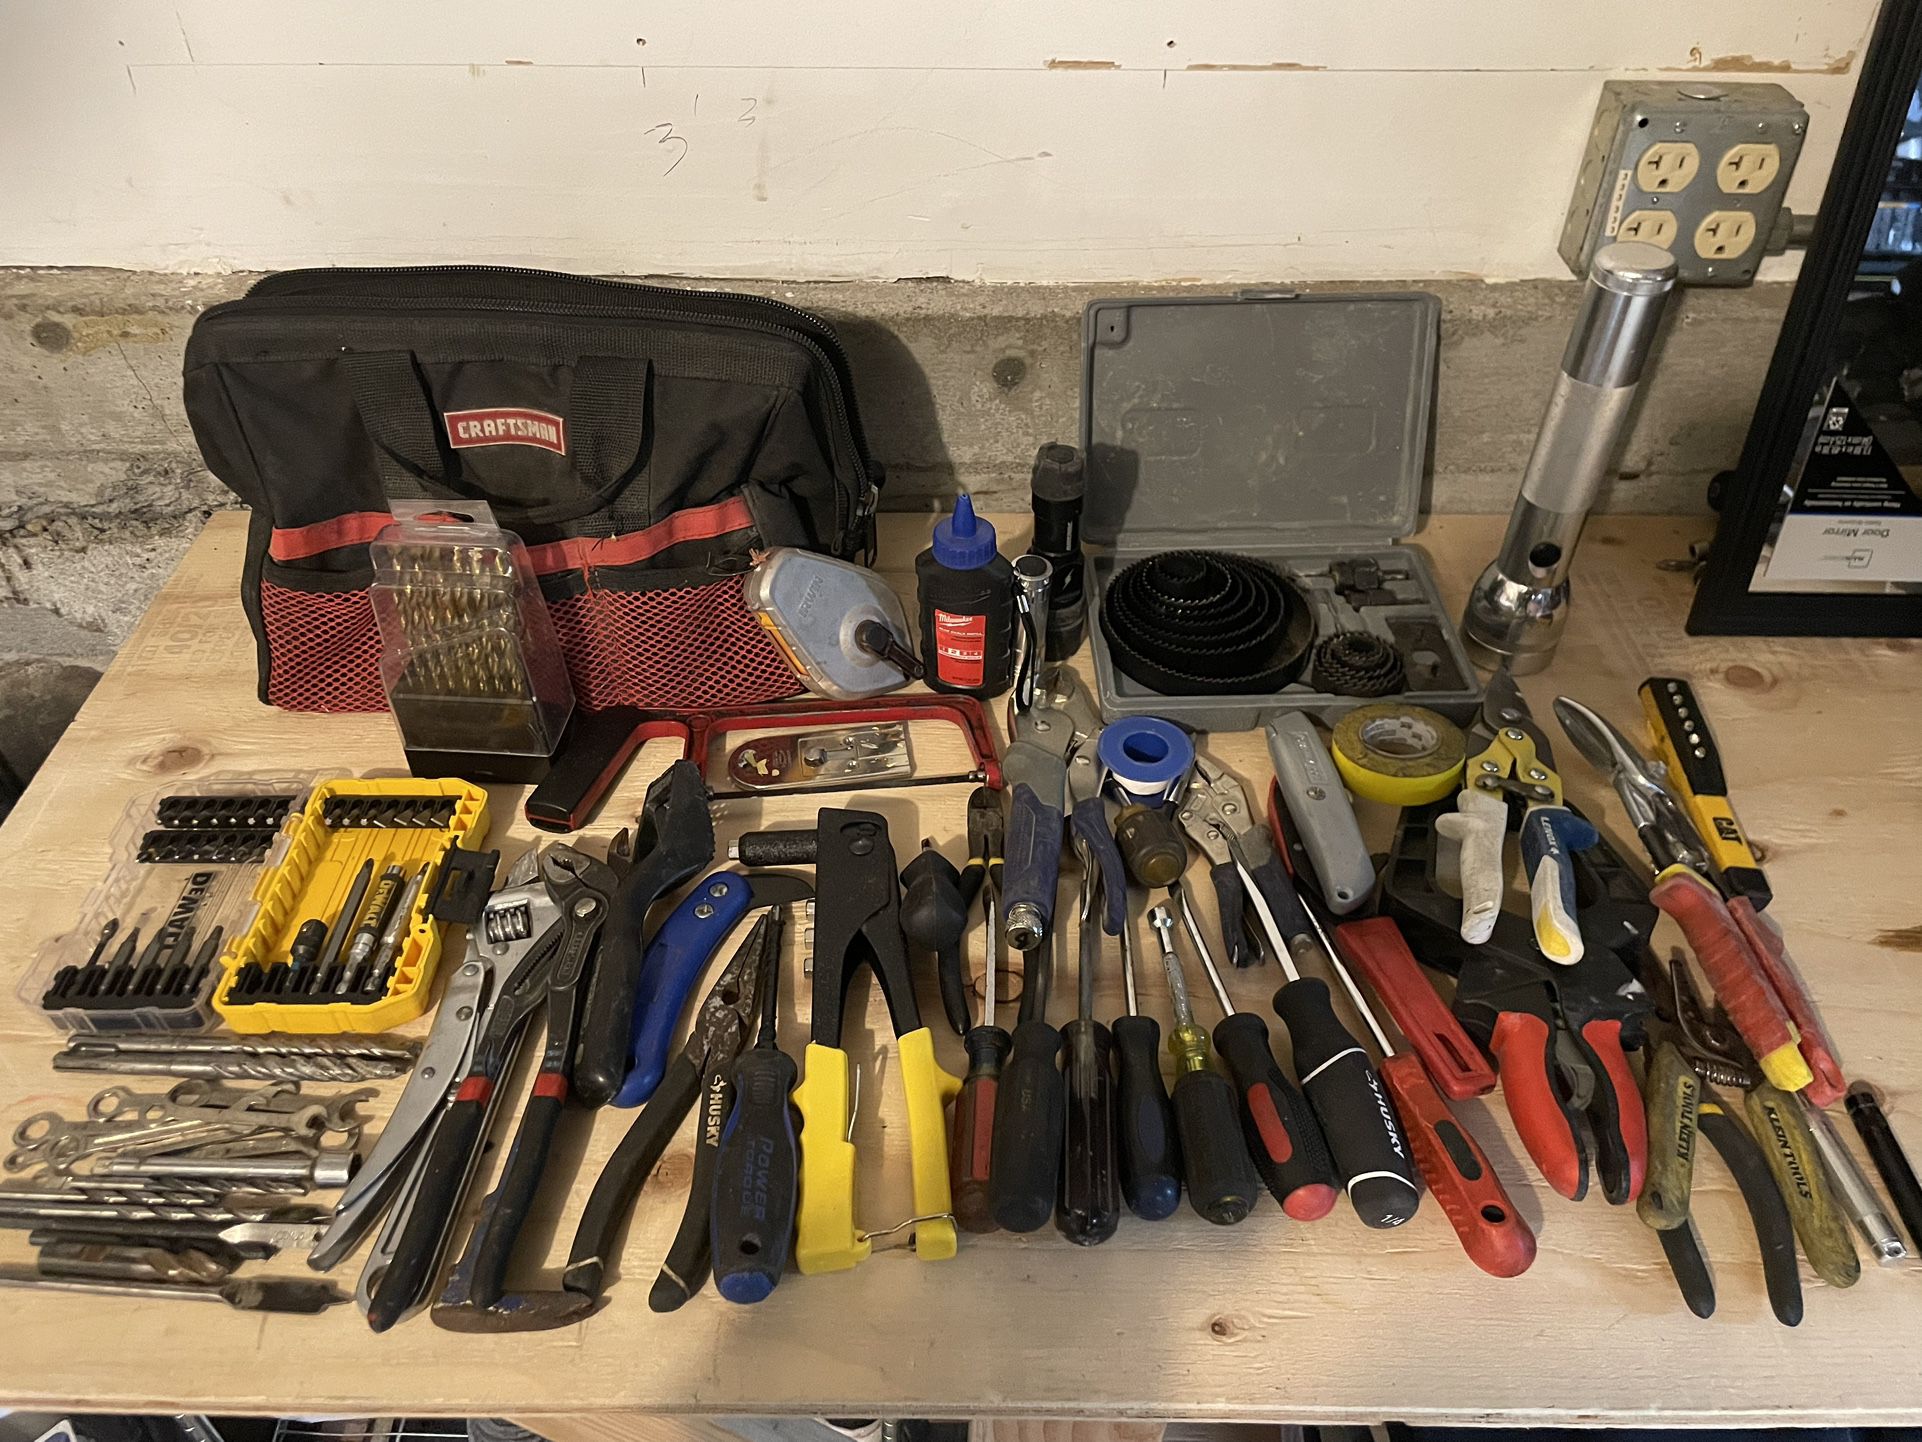 Bag Of Tools! Over 40 Tools! Craftsman, Dewalt, Klein, And More!